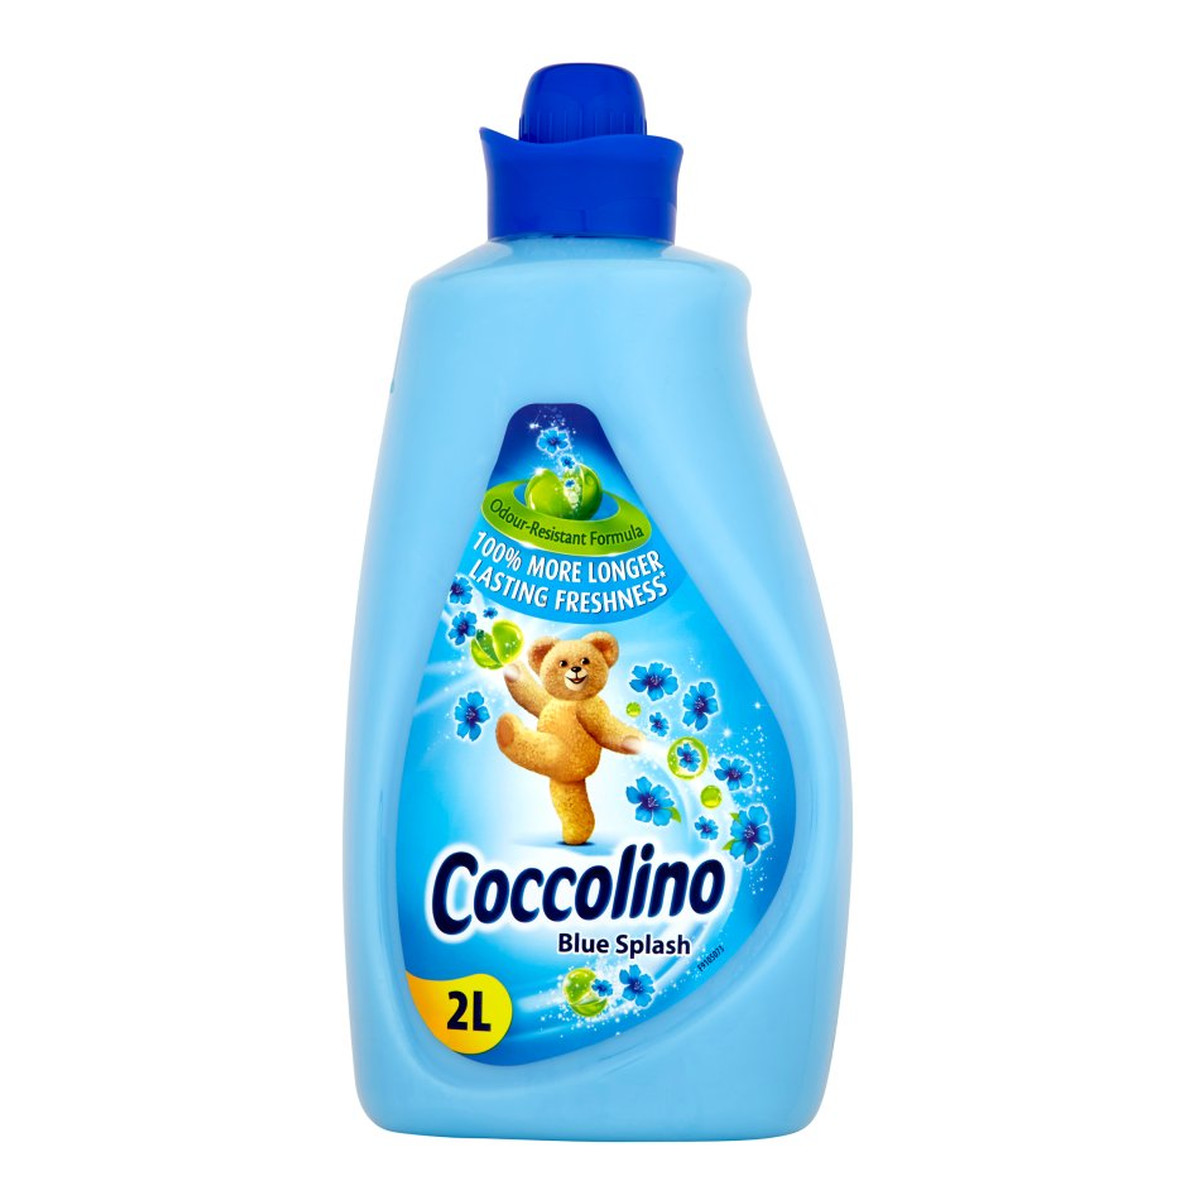 Coccolino Blue Splash Płyn do płukania tkanin koncentrat (57 prań) 2l